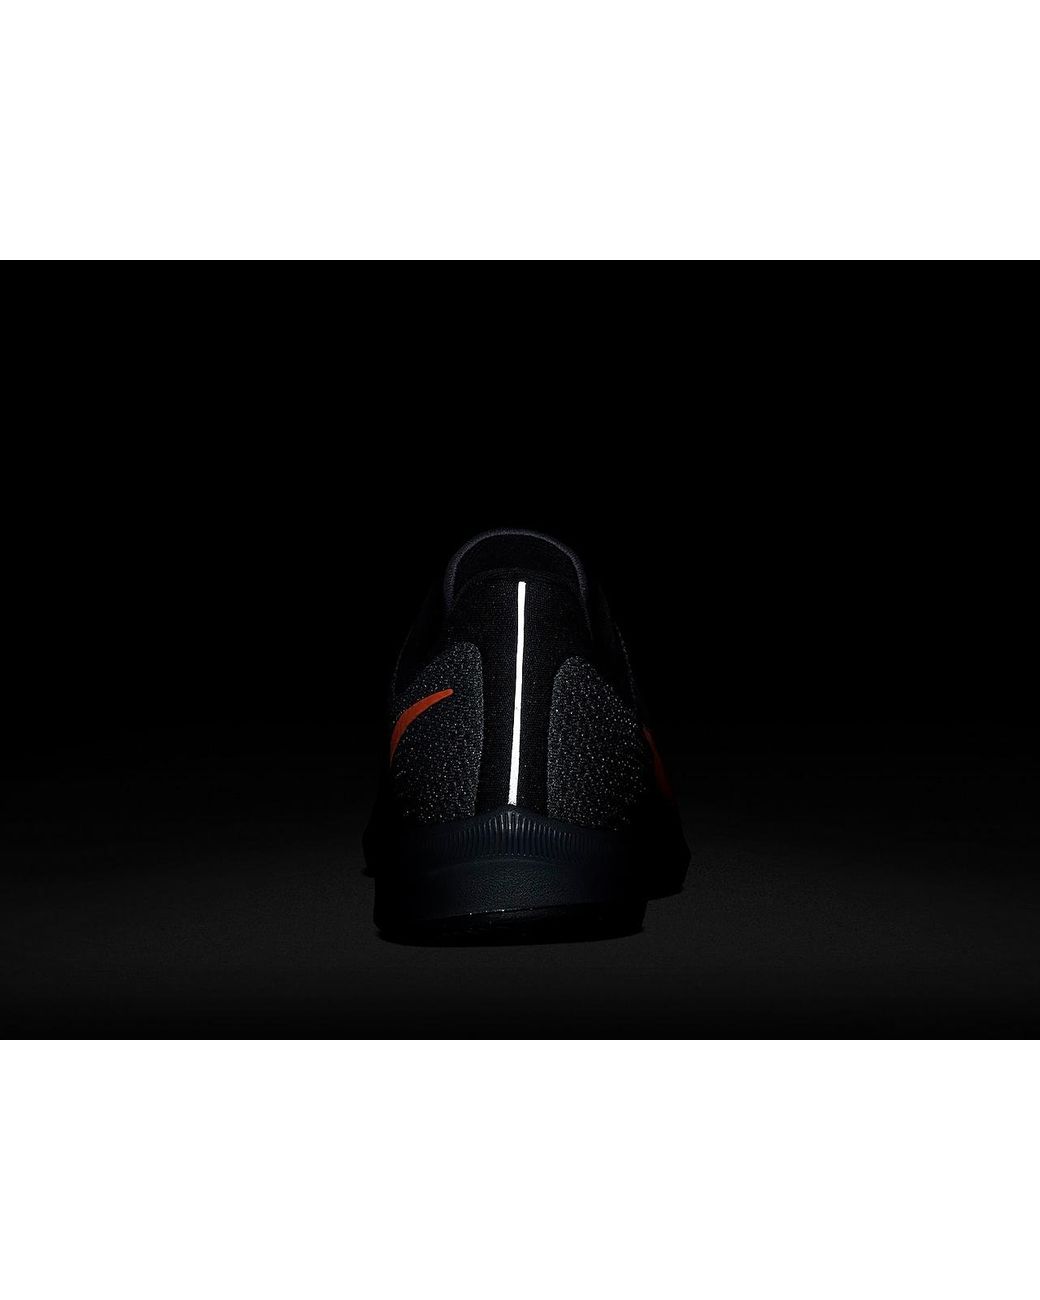 Nike Synthetic Quest 2 Running Shoe in Black/Grey/Orange (Gray) for Men |  Lyst